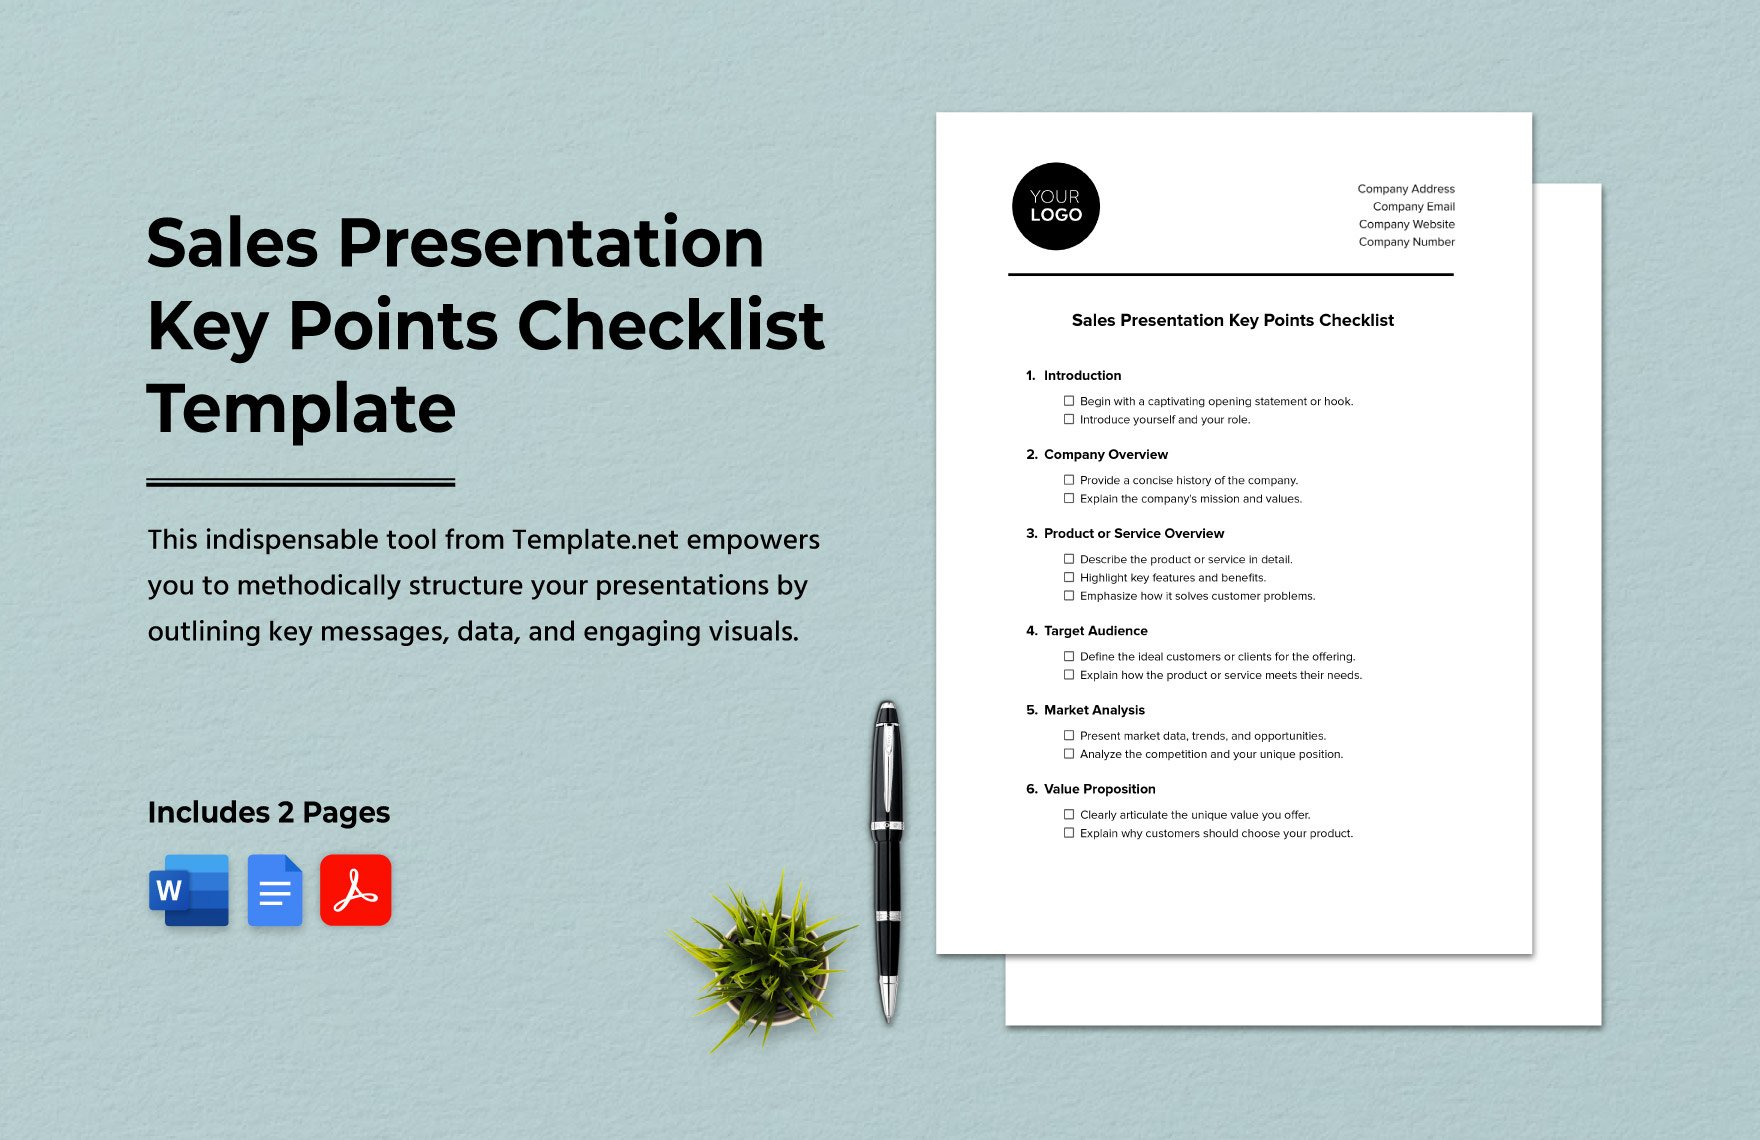 Sales Presentation Key Points Checklist Template